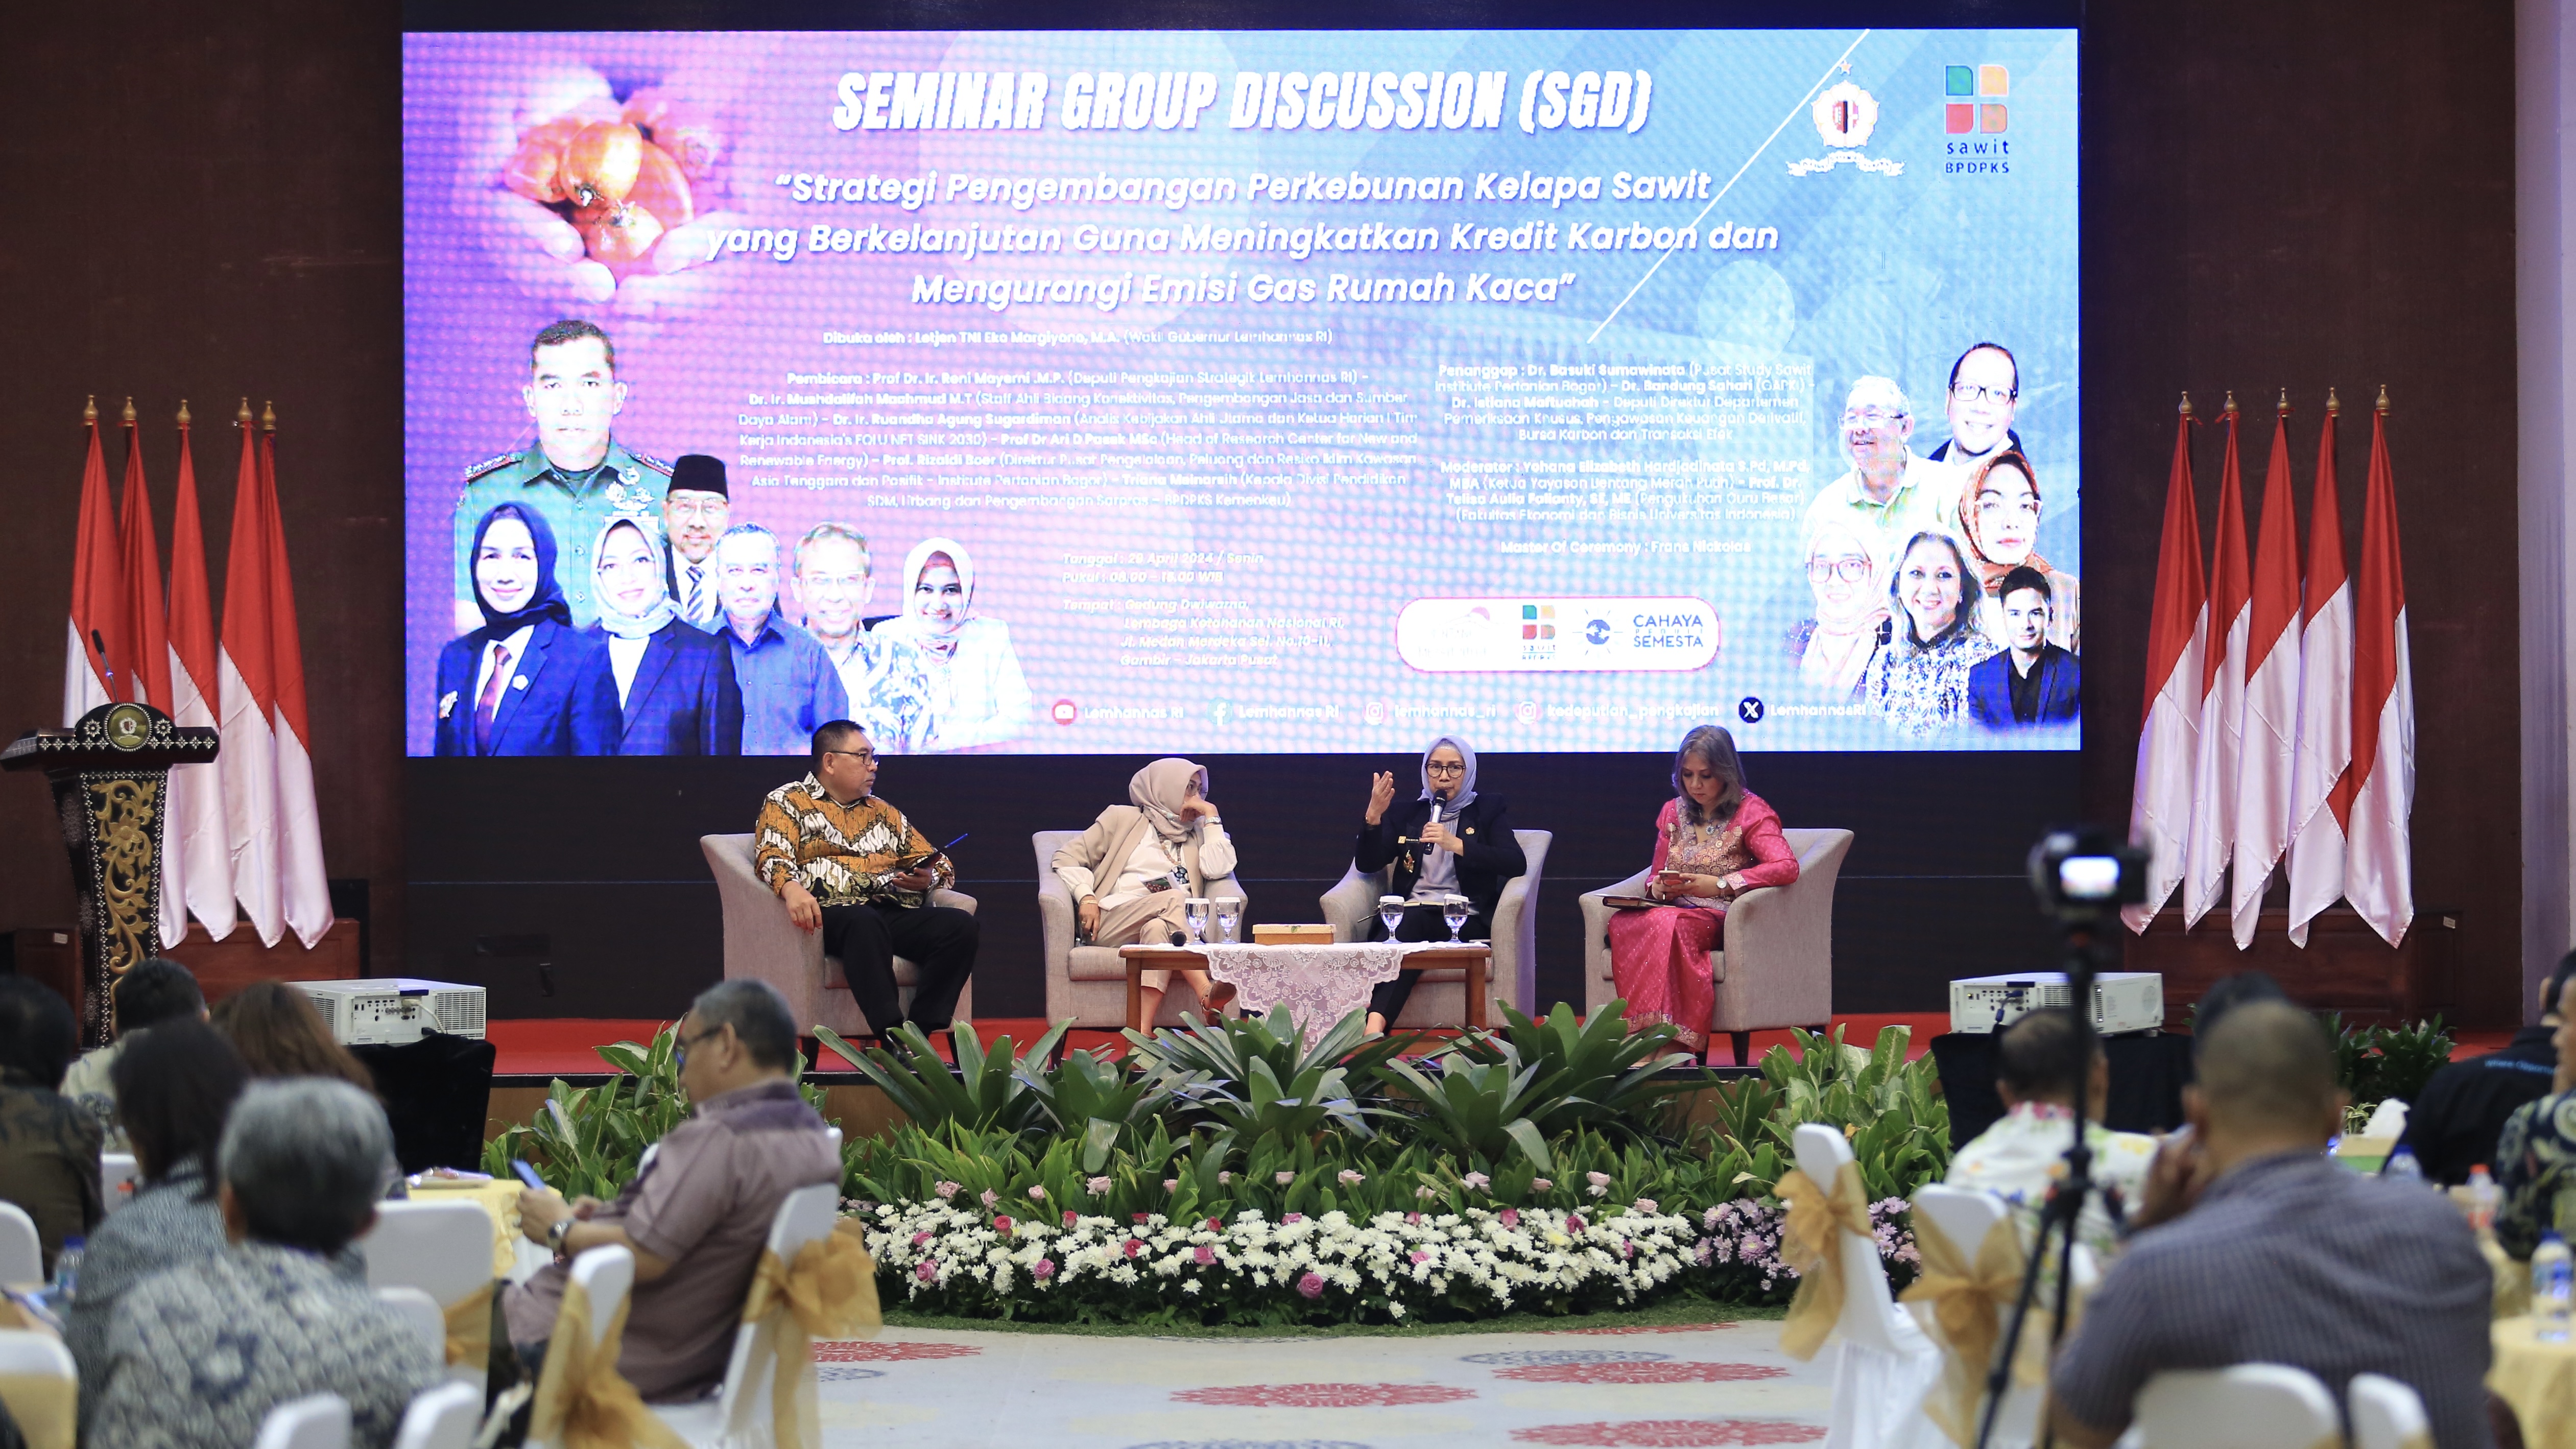 Lemhannas RI Kolaborasikan Seminar Group Discussion Pengembangan Perkebunan Kelapa Sawit Bersama Yayasan Bentang Merah Putih